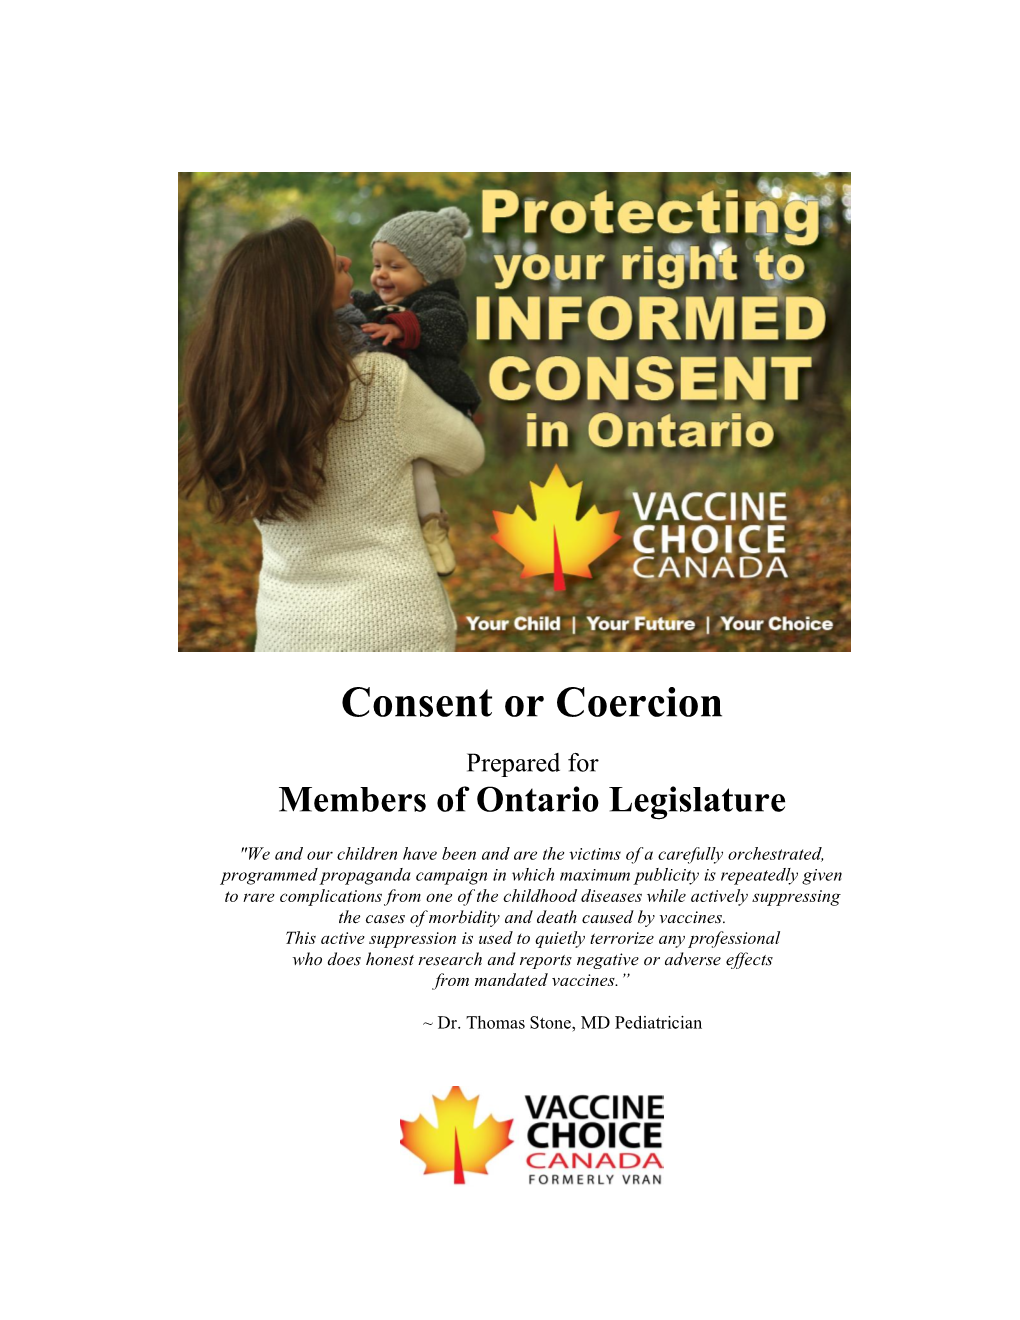 Consent Or Coercion? – Prepared for Members of Ontario Legislature